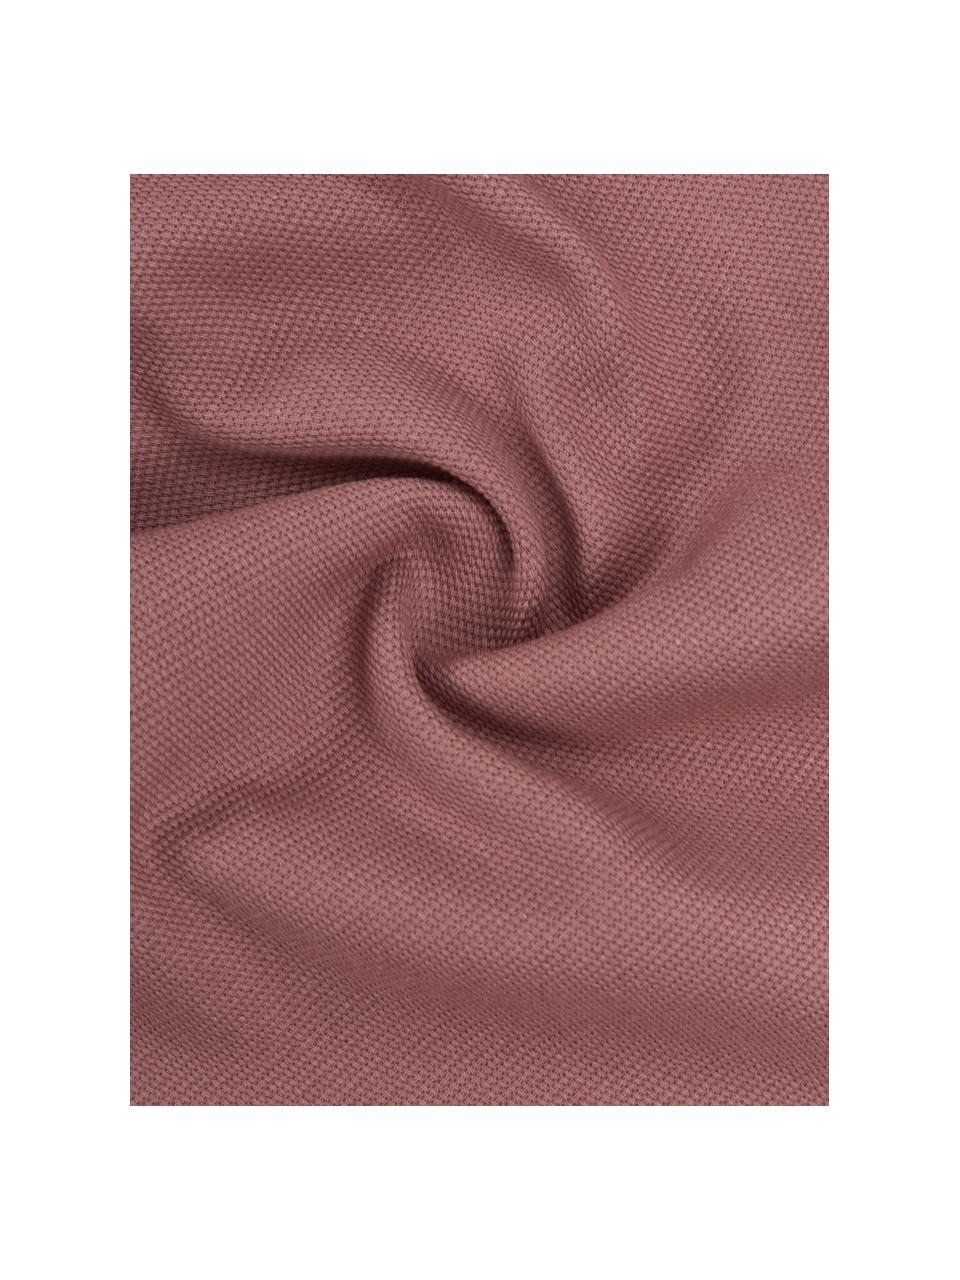 Federa arredo in cotone rosso bacca Mads, 100% cotone, Rosso, Larg. 40 x Lung. 40 cm